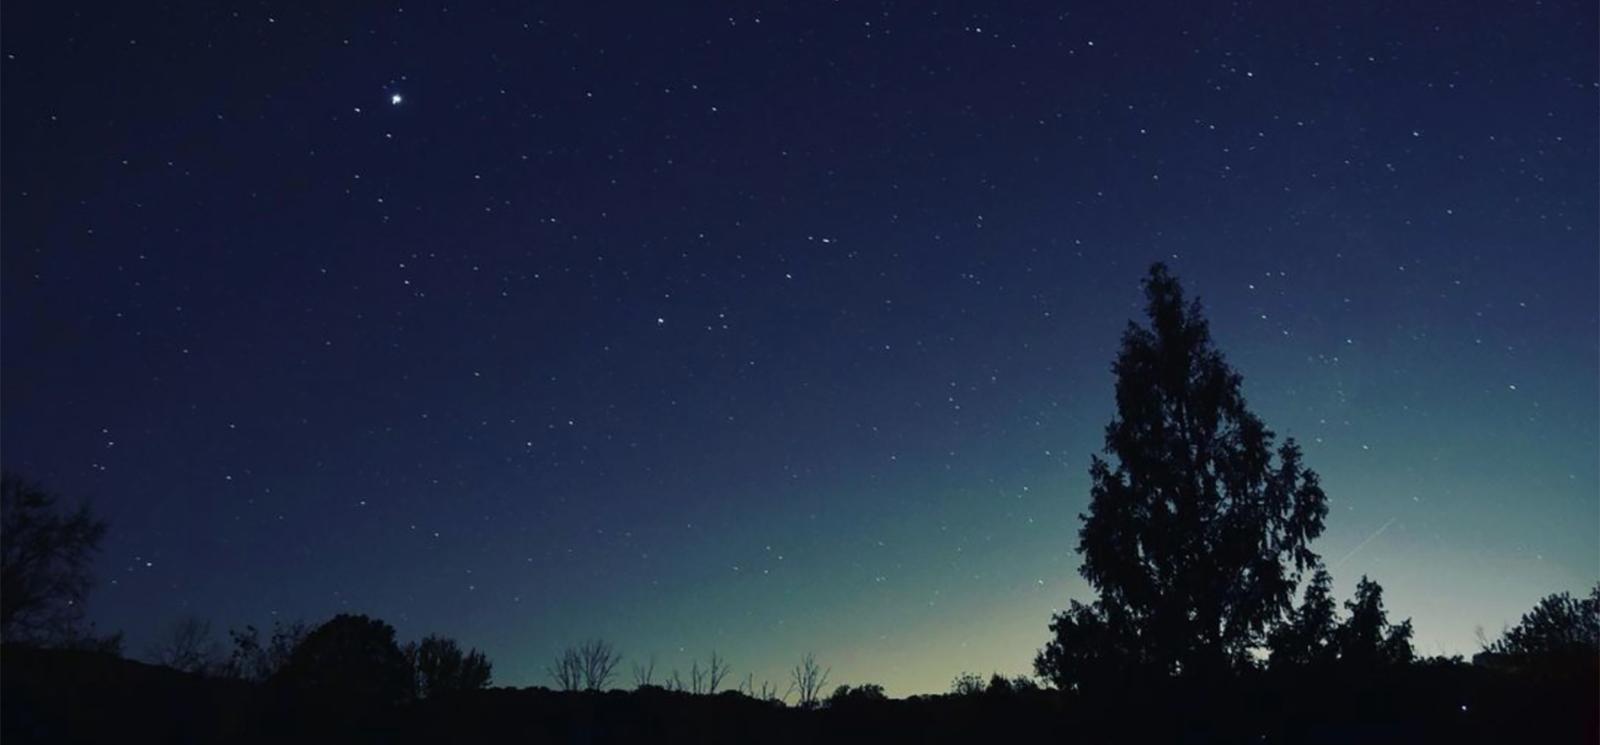 A silhouette of trees with dark starry sky (Instagram@chefdickspix)